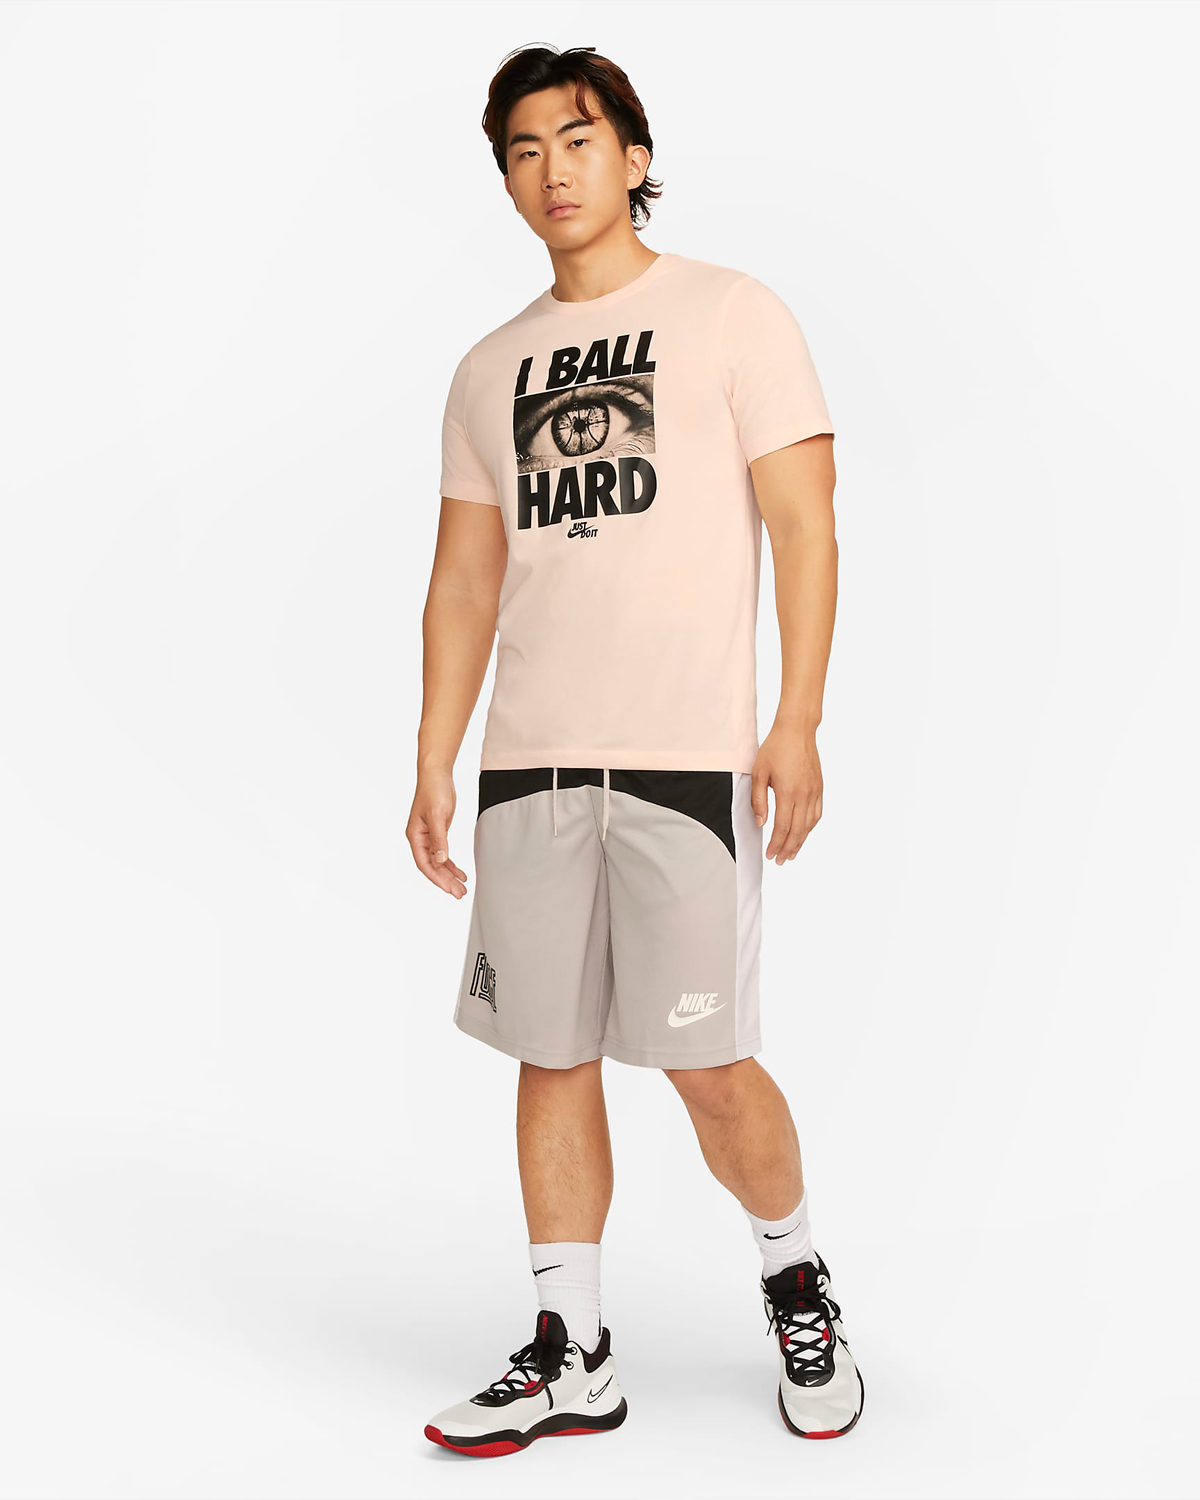 Nike-Basketball-I-Ball-Hard-T-Shirt-Guava-Ice-Outfit